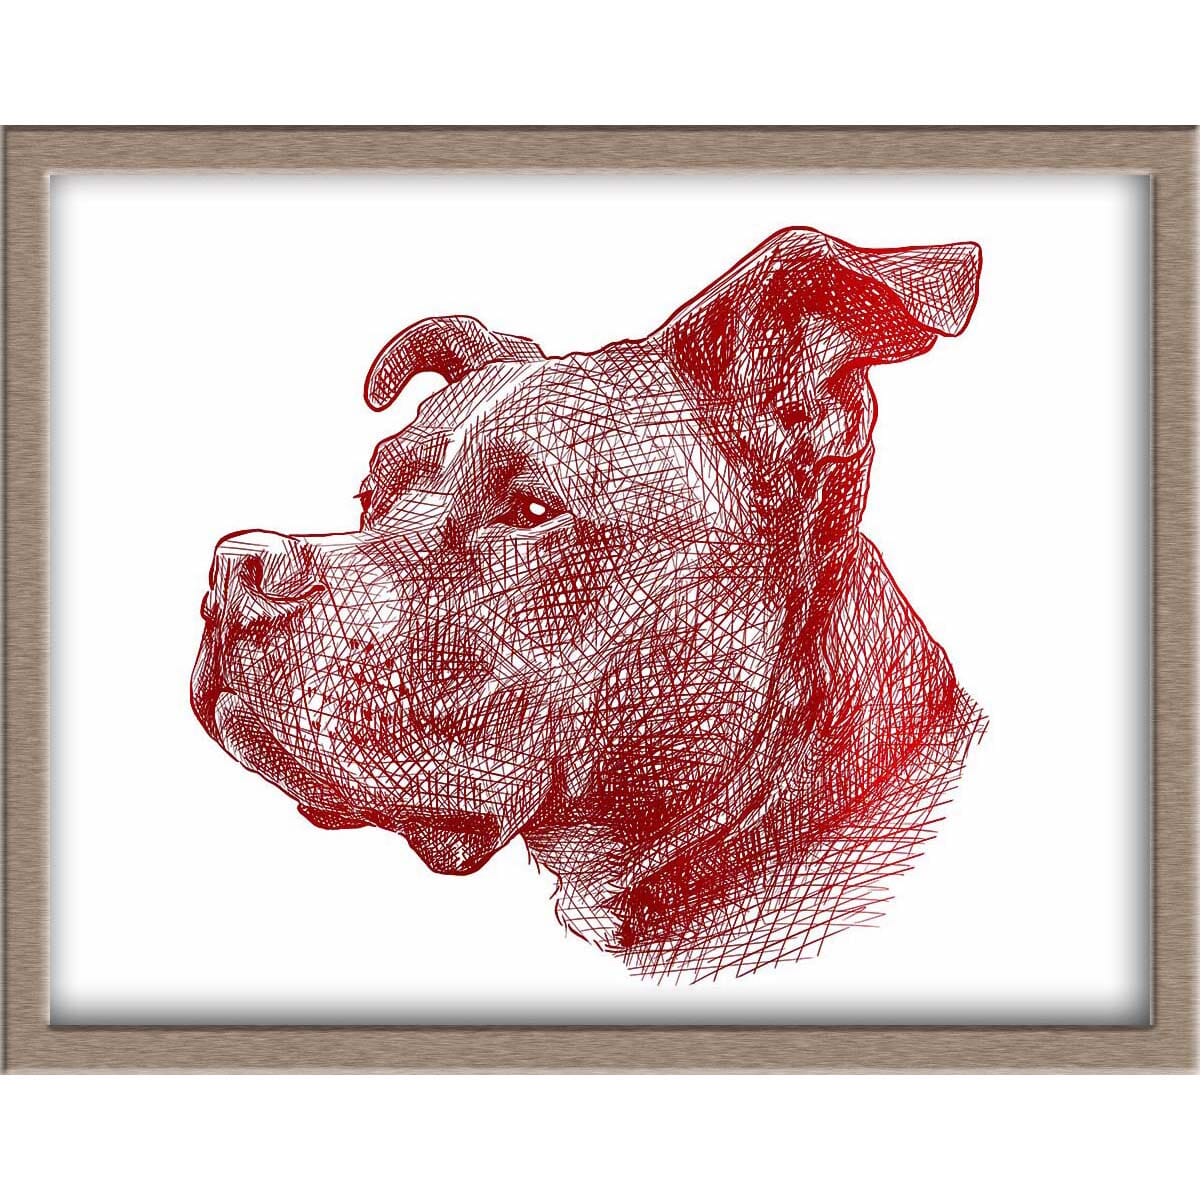 Pitbull Dog Portrait Foiled Print (Max) Posters, Prints, & Visual Artwork JoyousJoyfulJoyness 